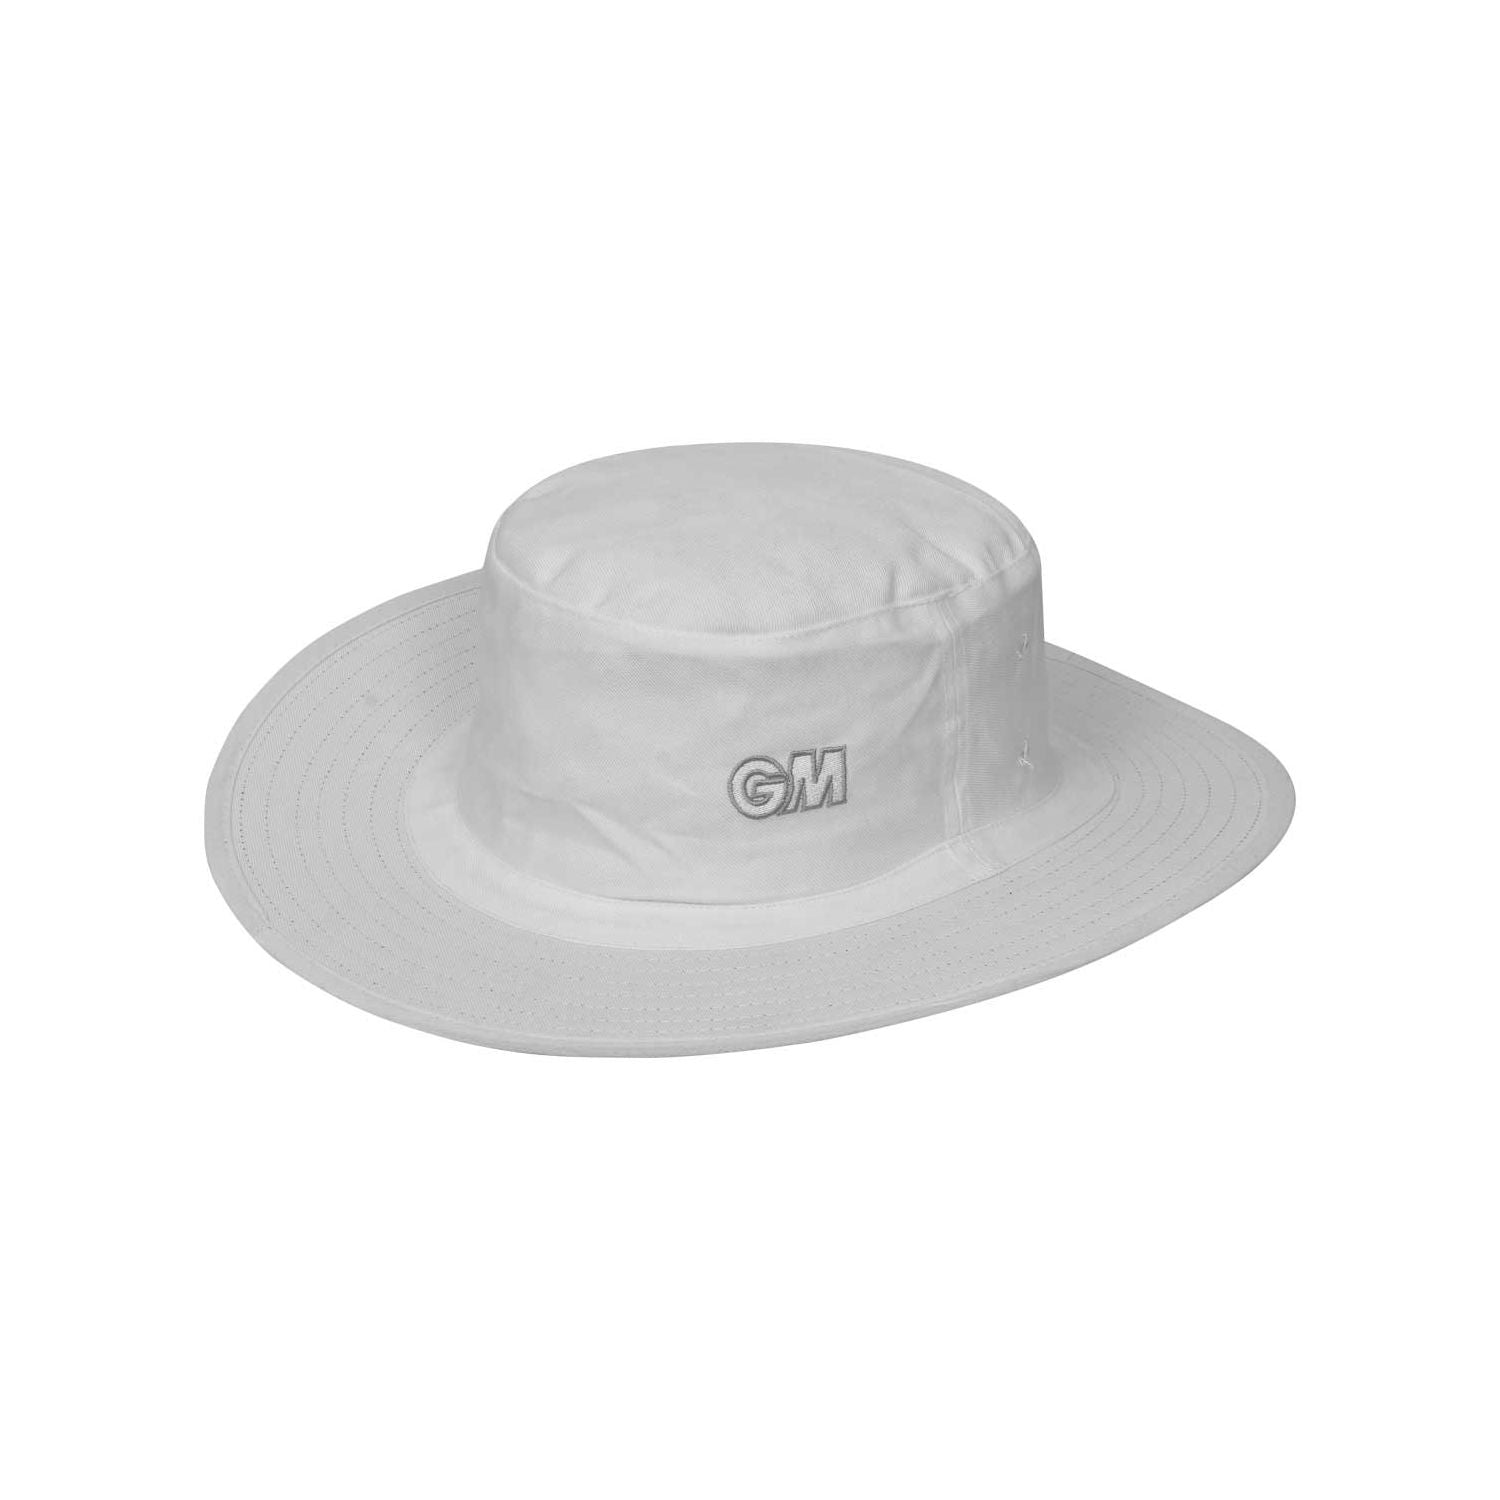 GM Panama Hat